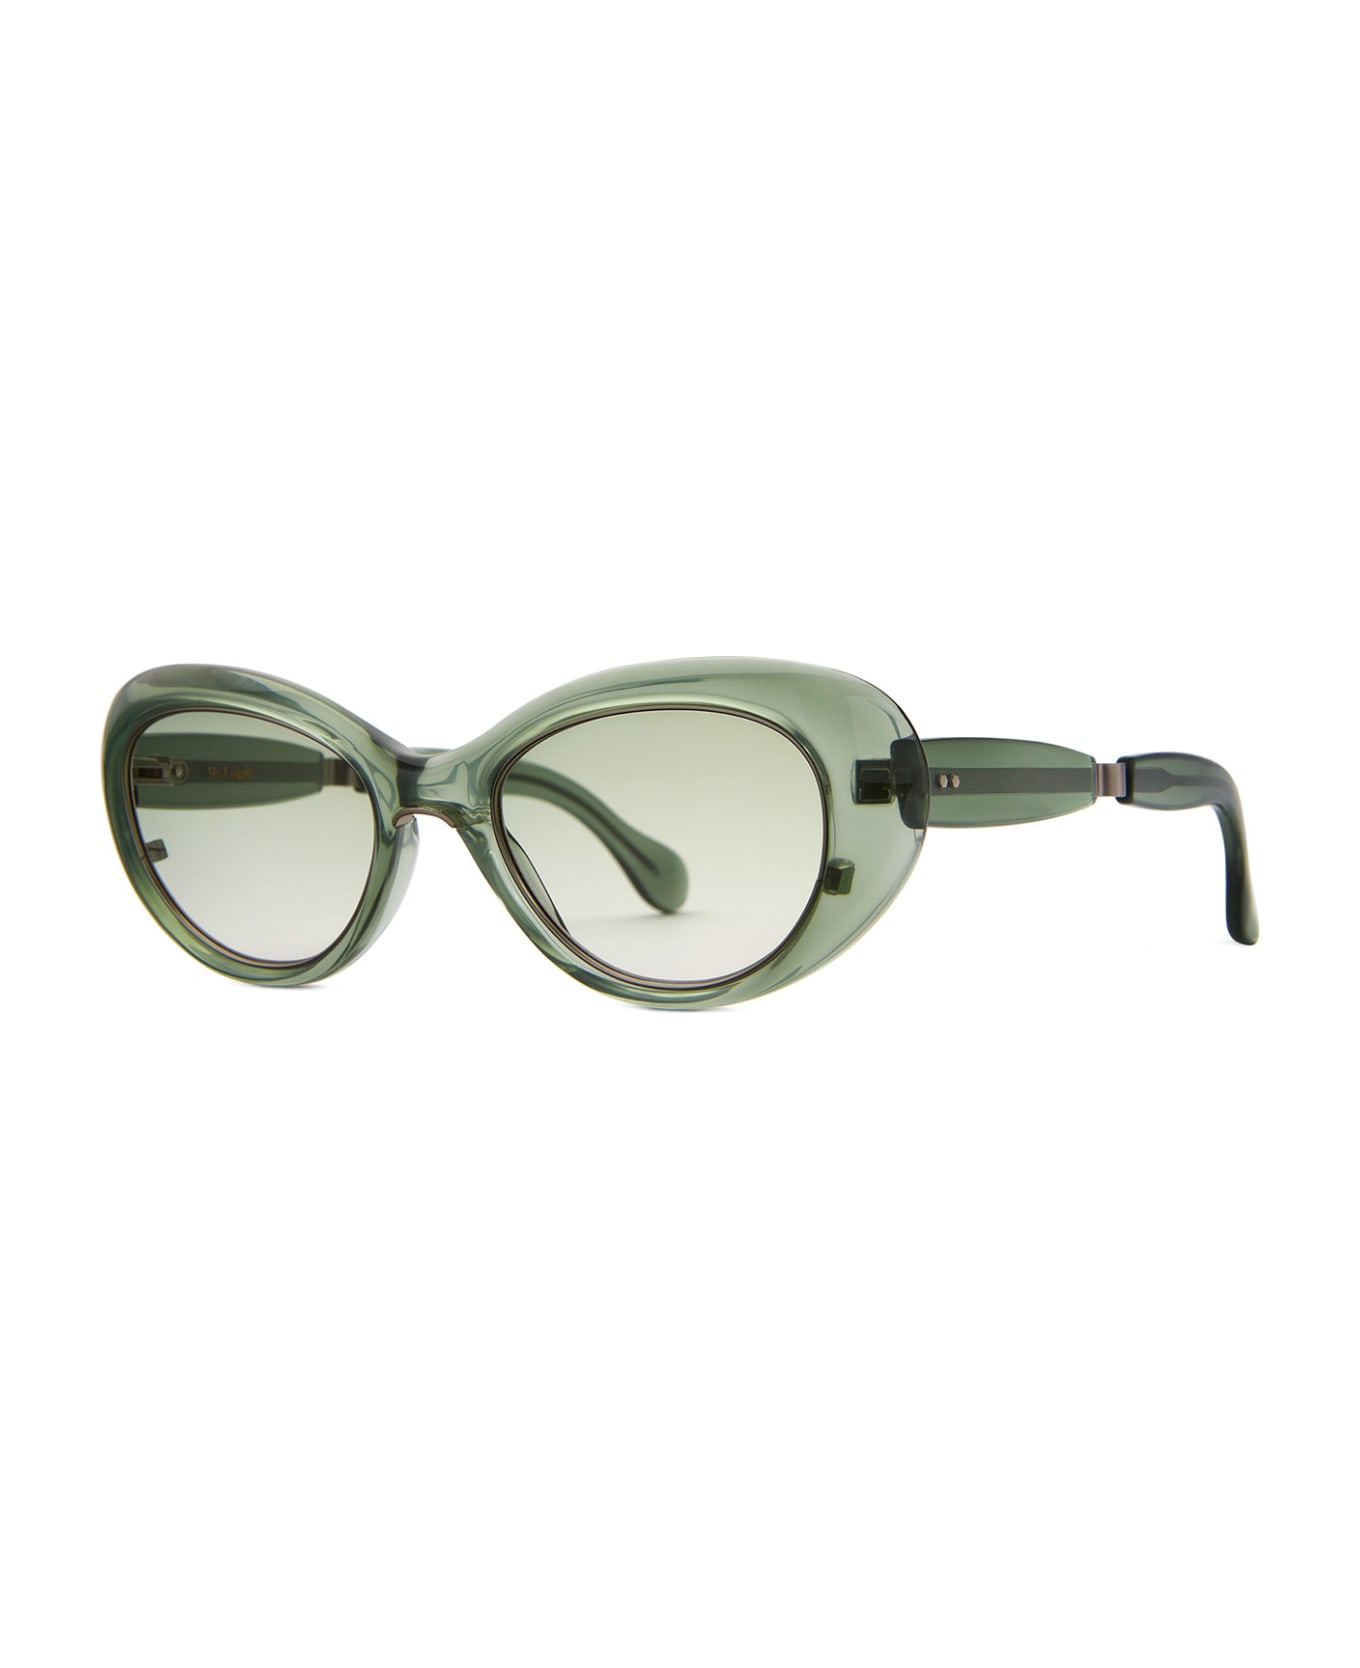 Mr. Leight Selma S Eucalyptus edition Sunglasses - Eucalyptus